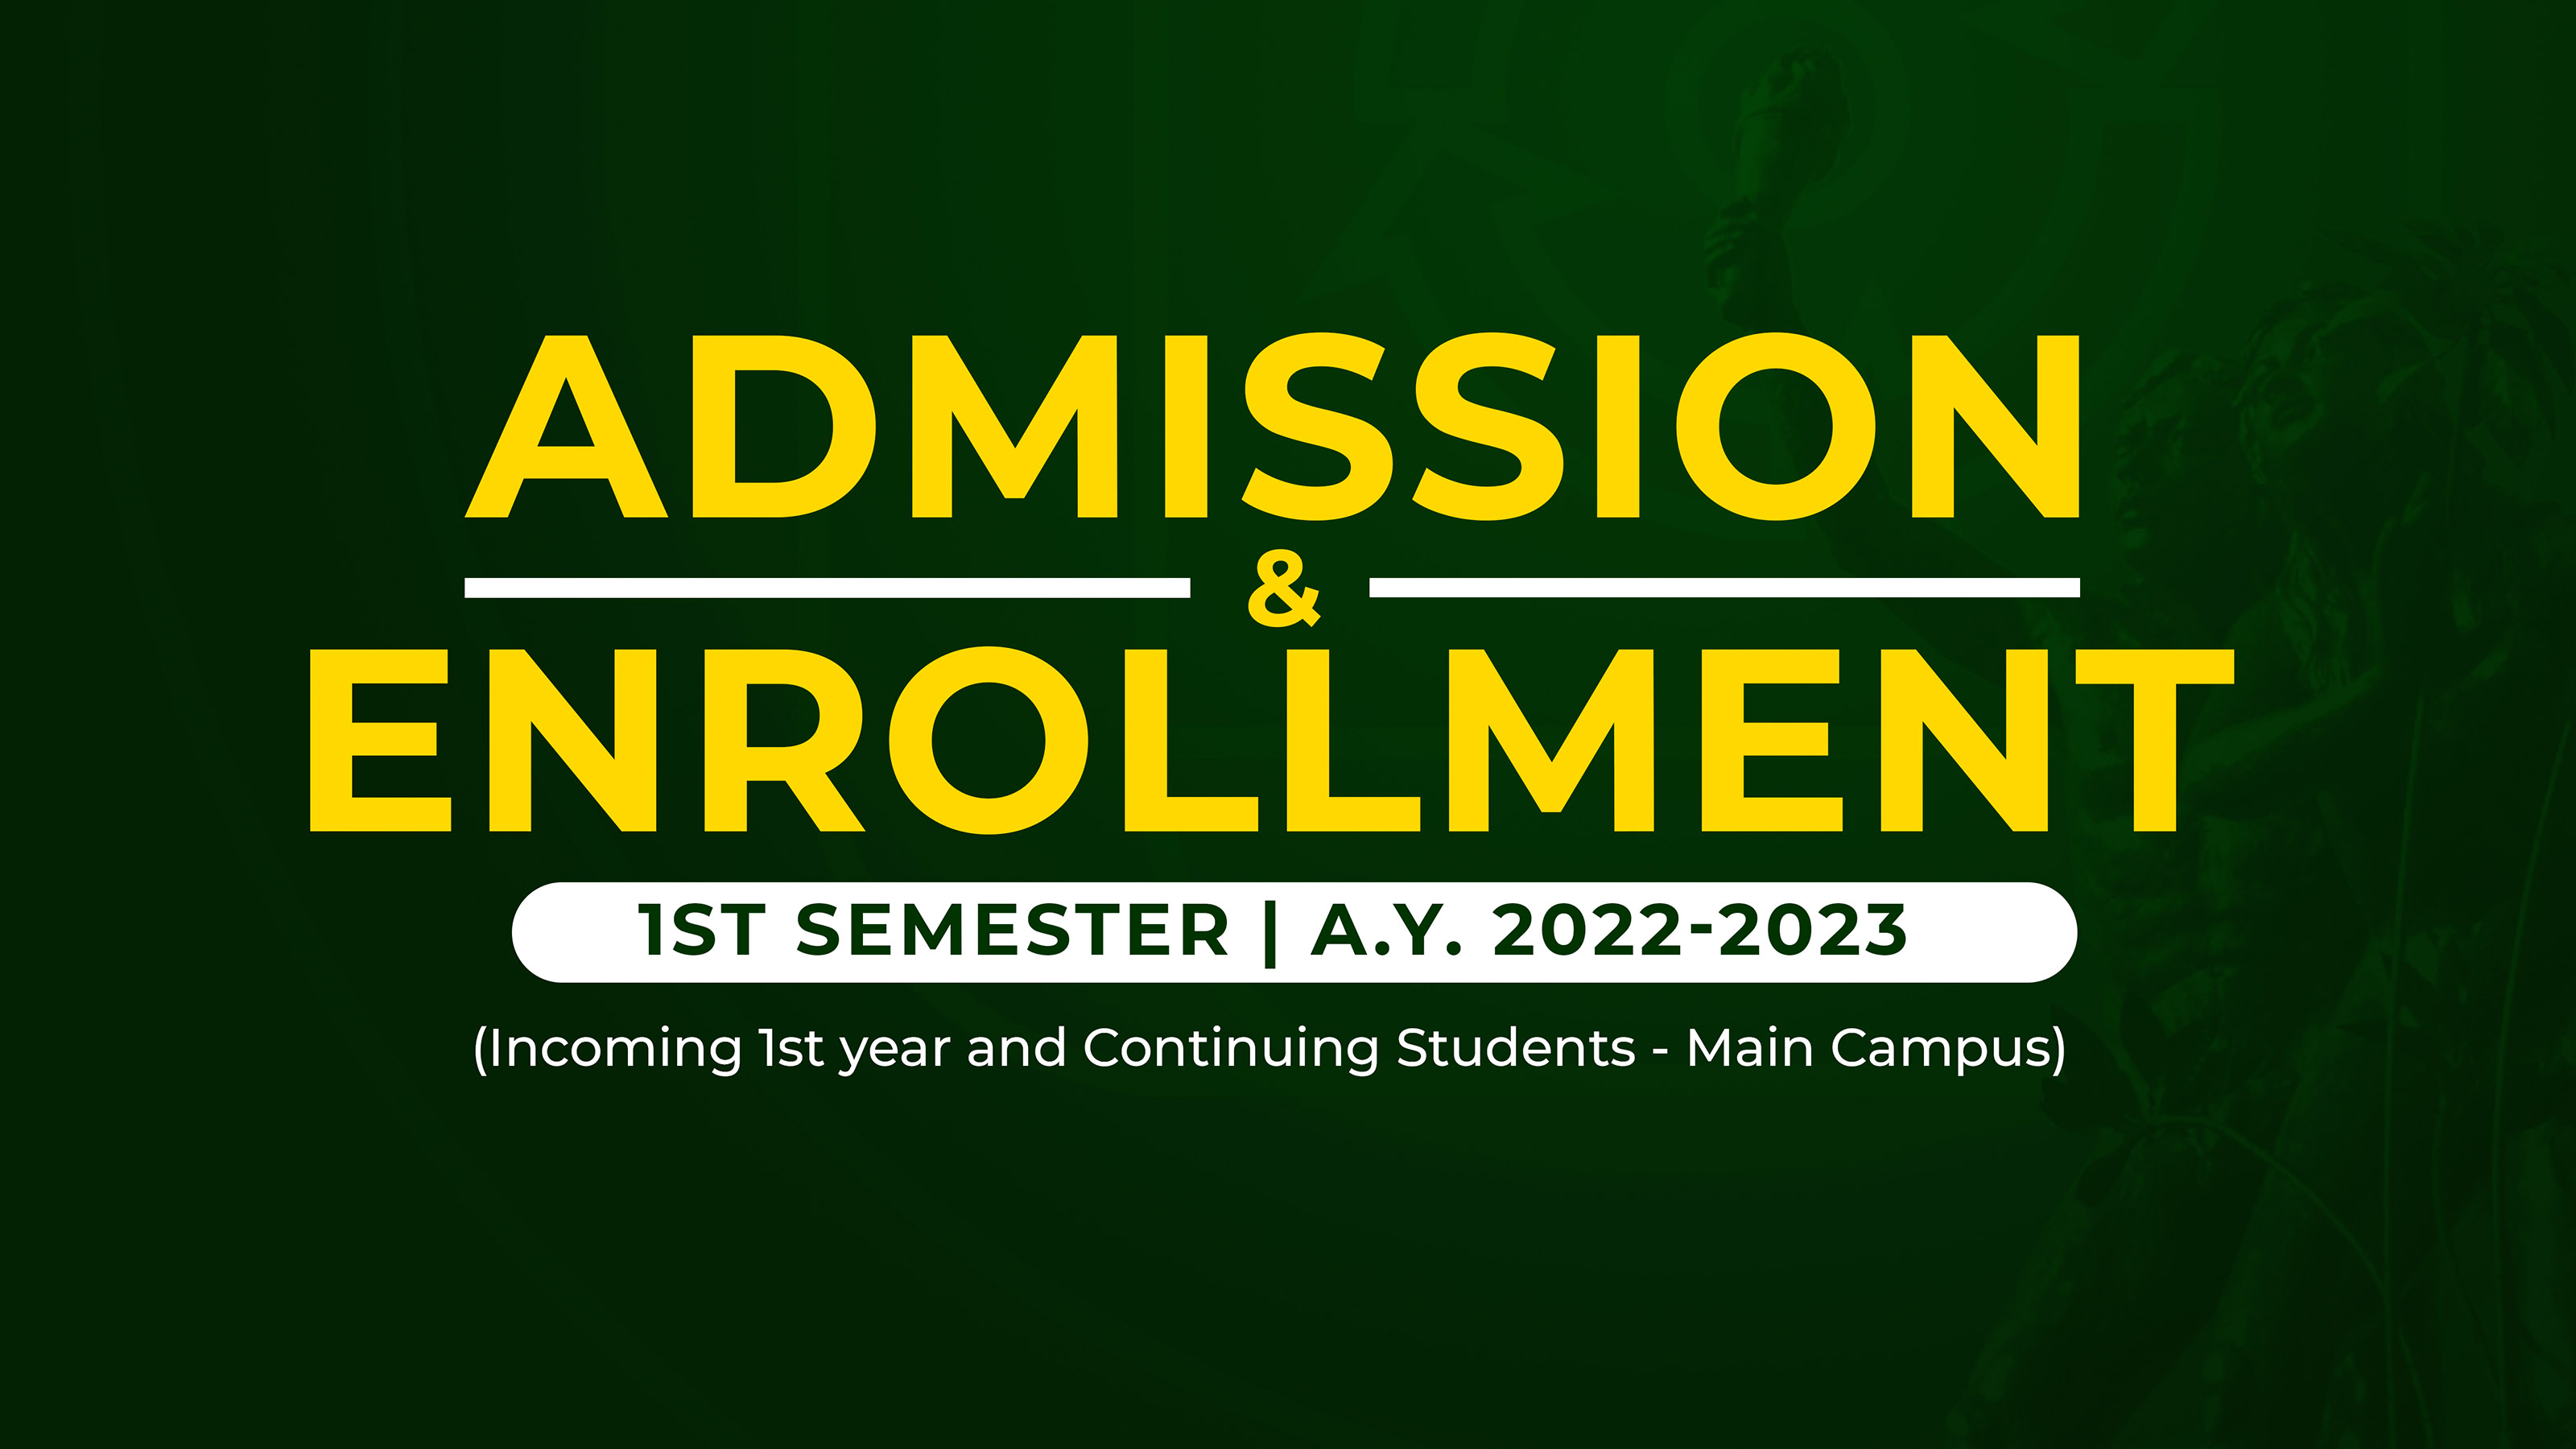 EnrollAtVSU Admission and Enrollment for 1st sem AY 2022-2023